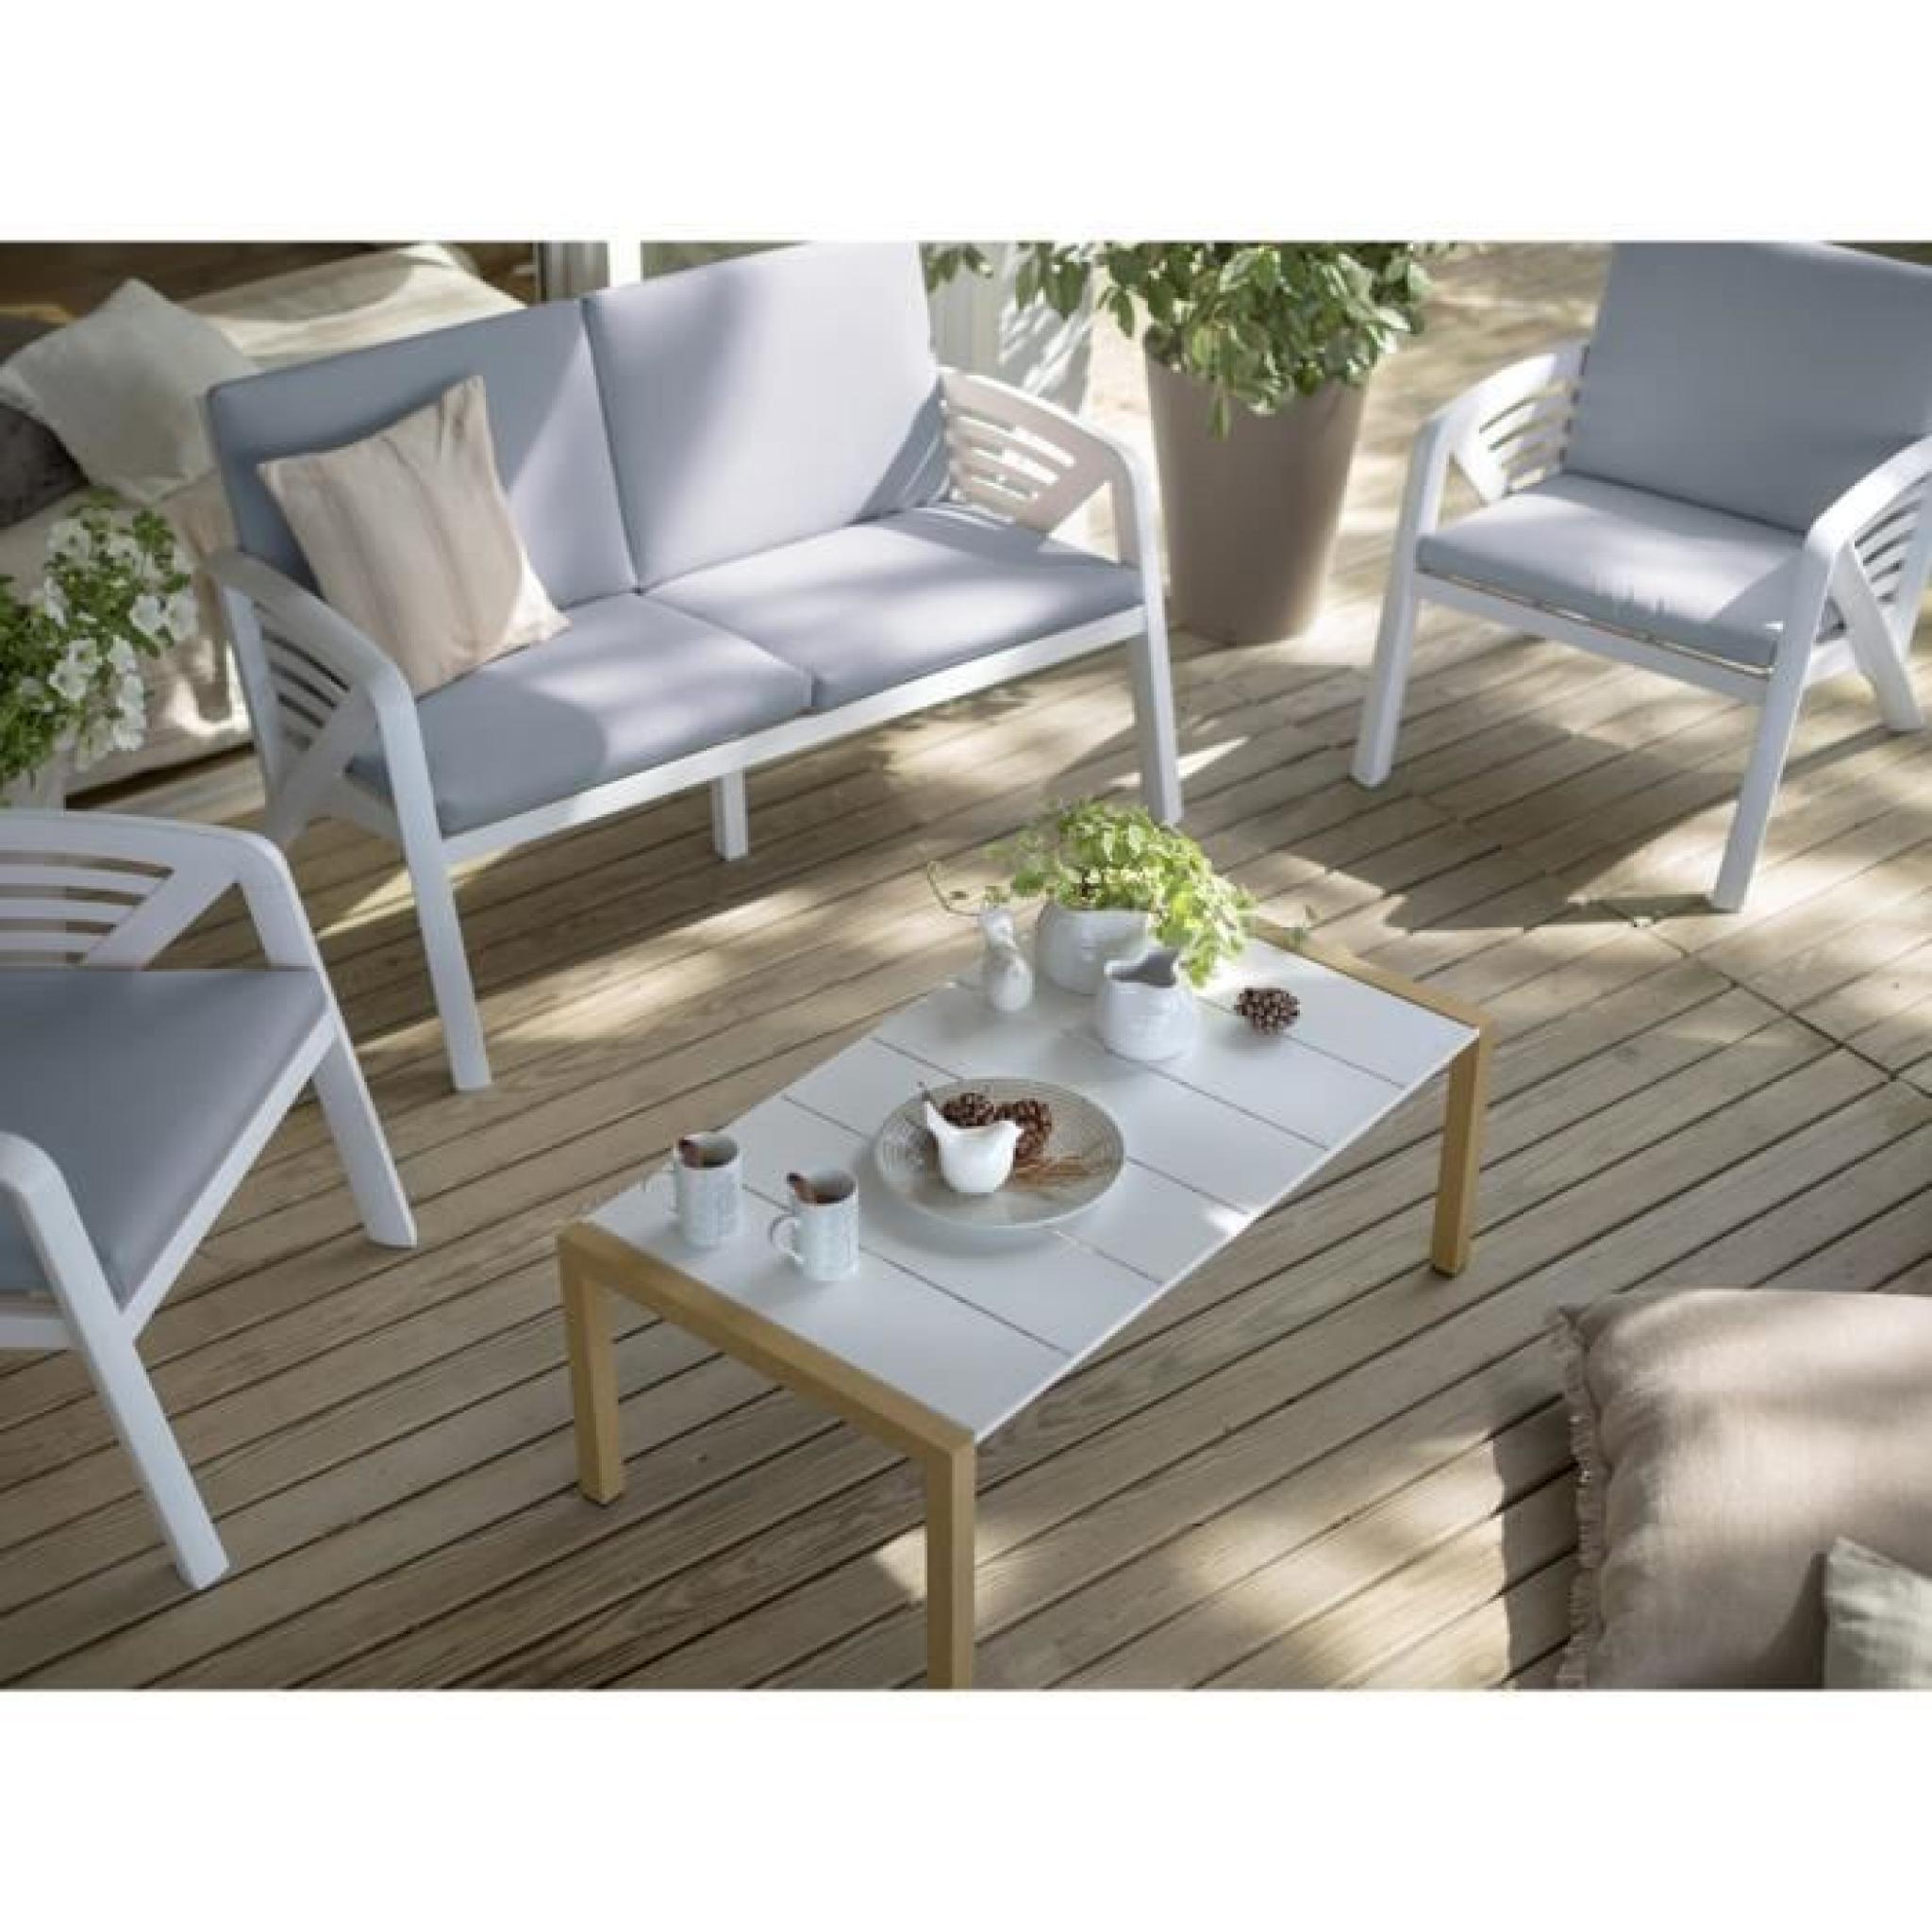 Salon de jardin Lounge Sunday Copenhague - 1 canapé + 2 fauteuils + 1 table basse pas cher